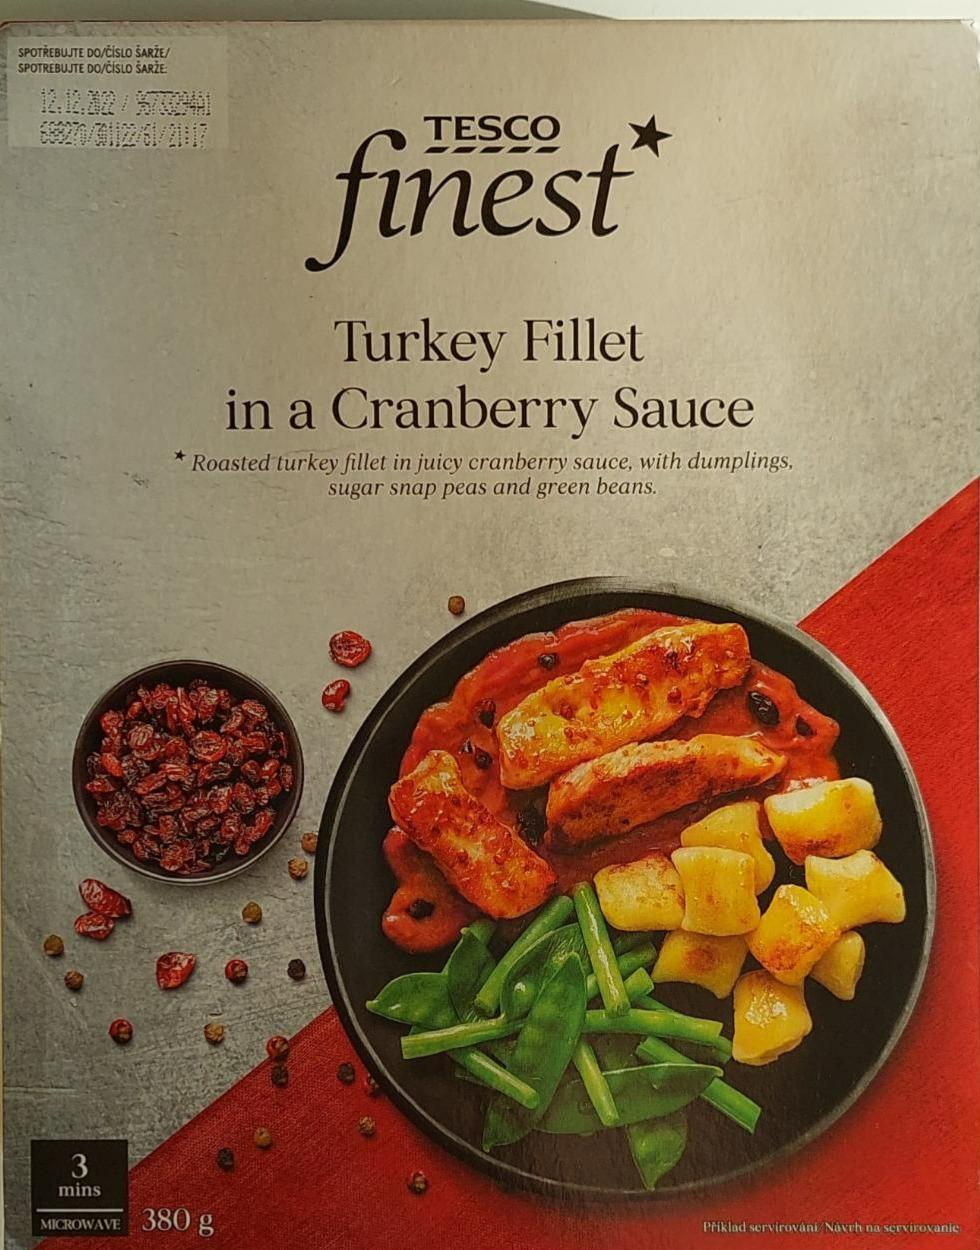 Fotografie - Turkey Fillet in a Cranberry Sauce Tesco finest